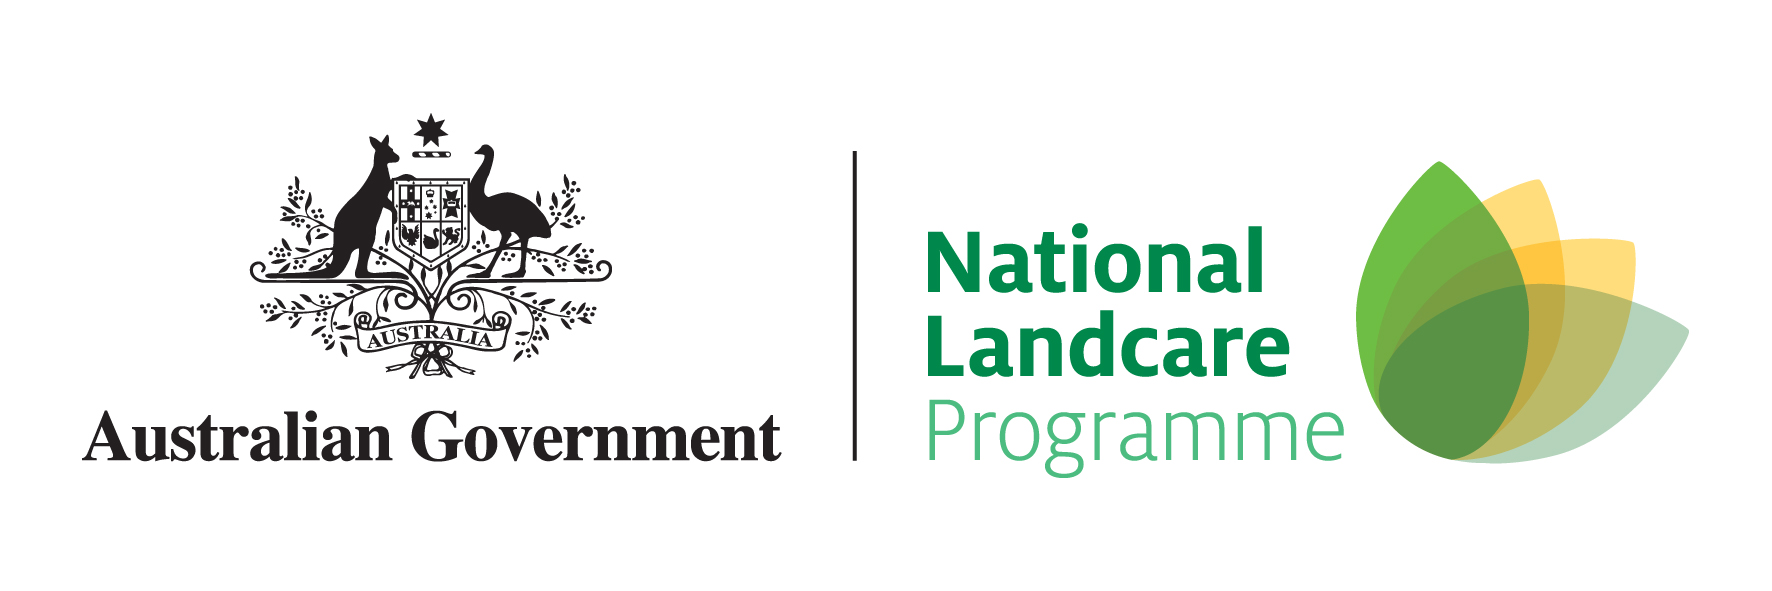 Australian Government - National Landcare Programme